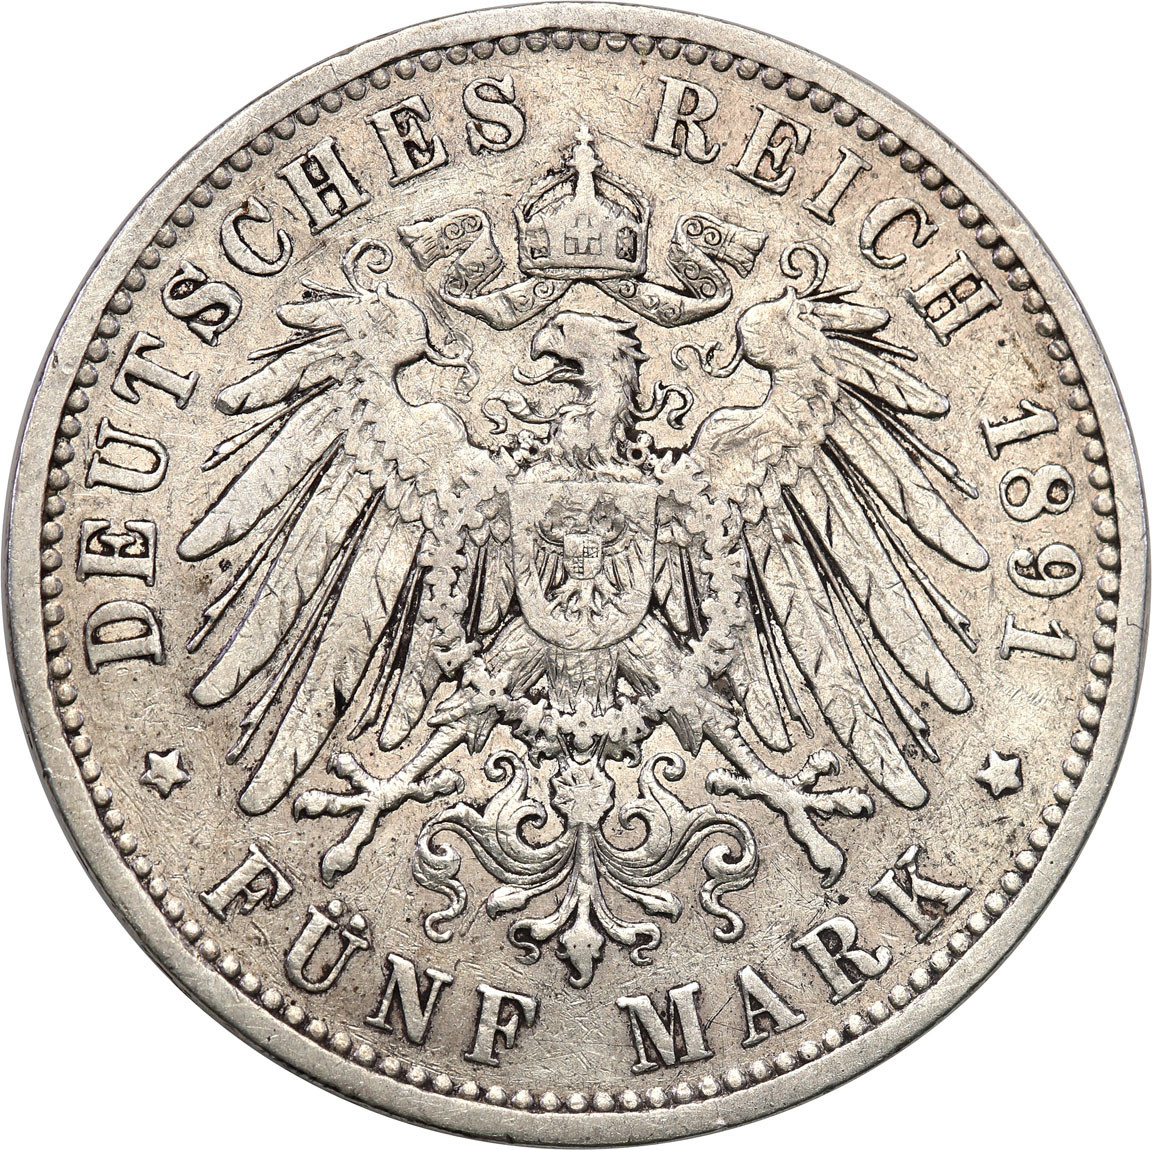 Niemcy, Hesja. 5 marek 1891 A, Berlin - RZADKIE